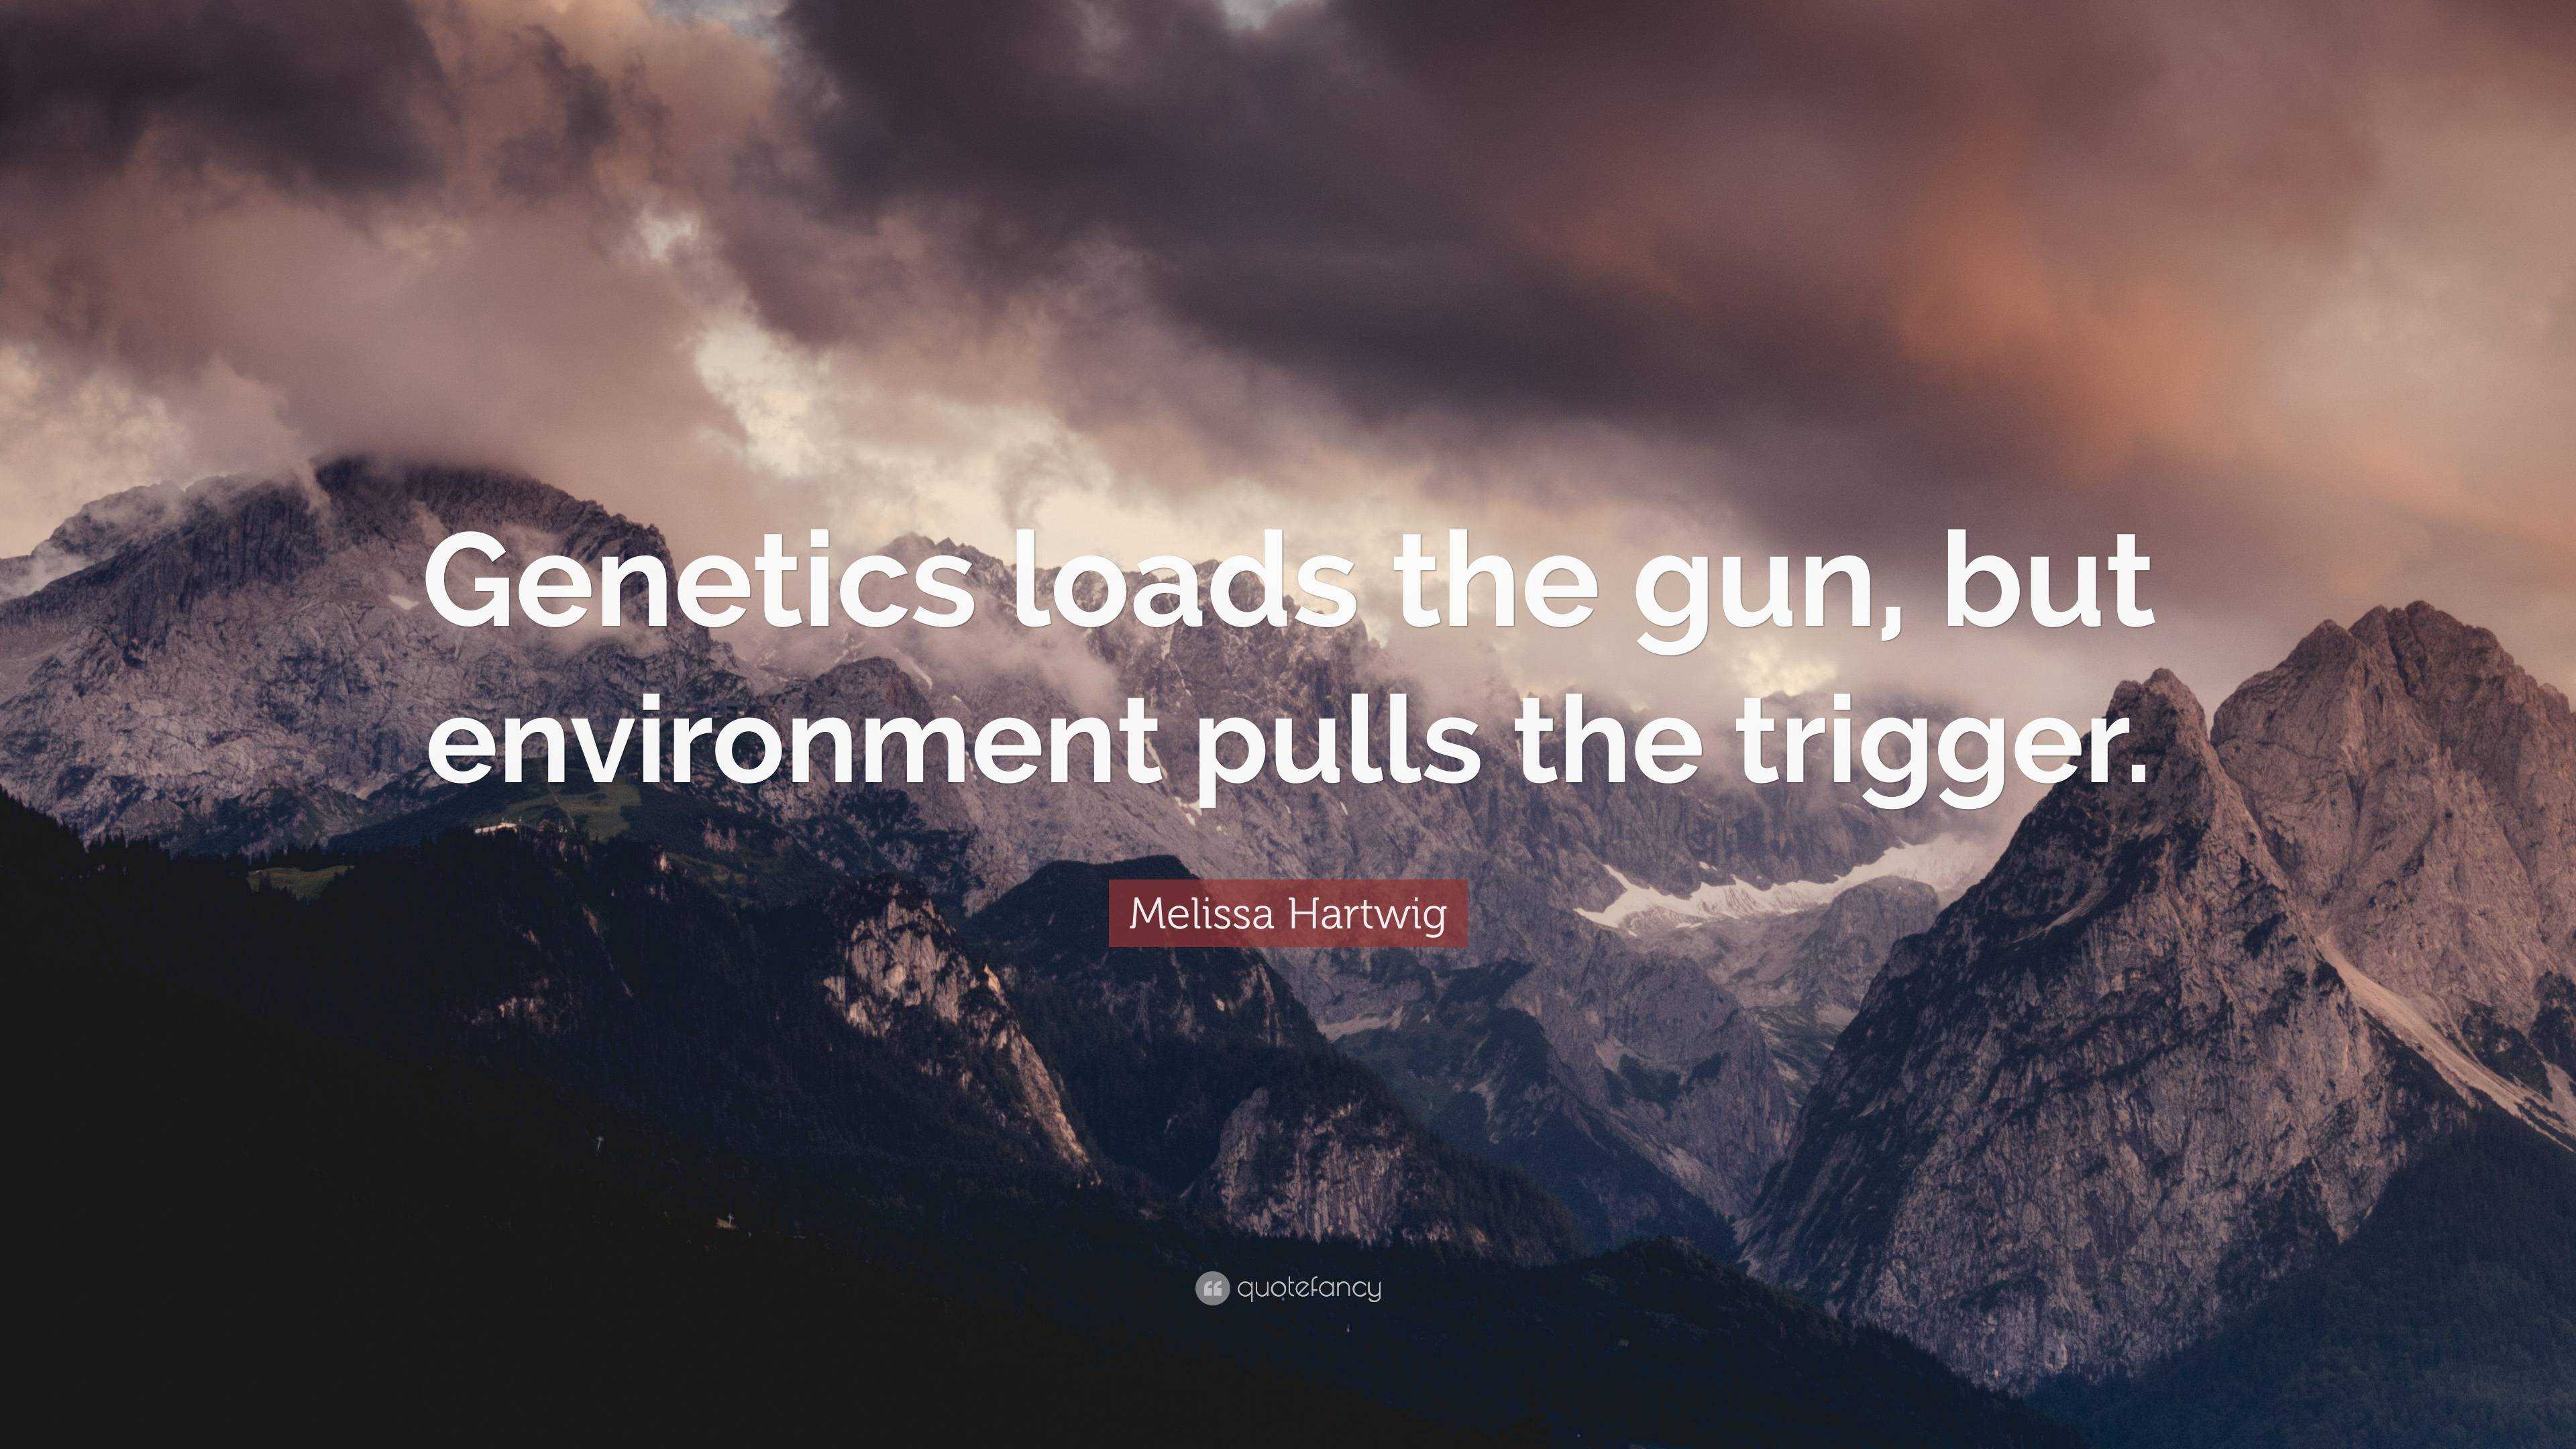 6545697 Melissa Hartwig Quote Genetics loads the gun but environment pulls